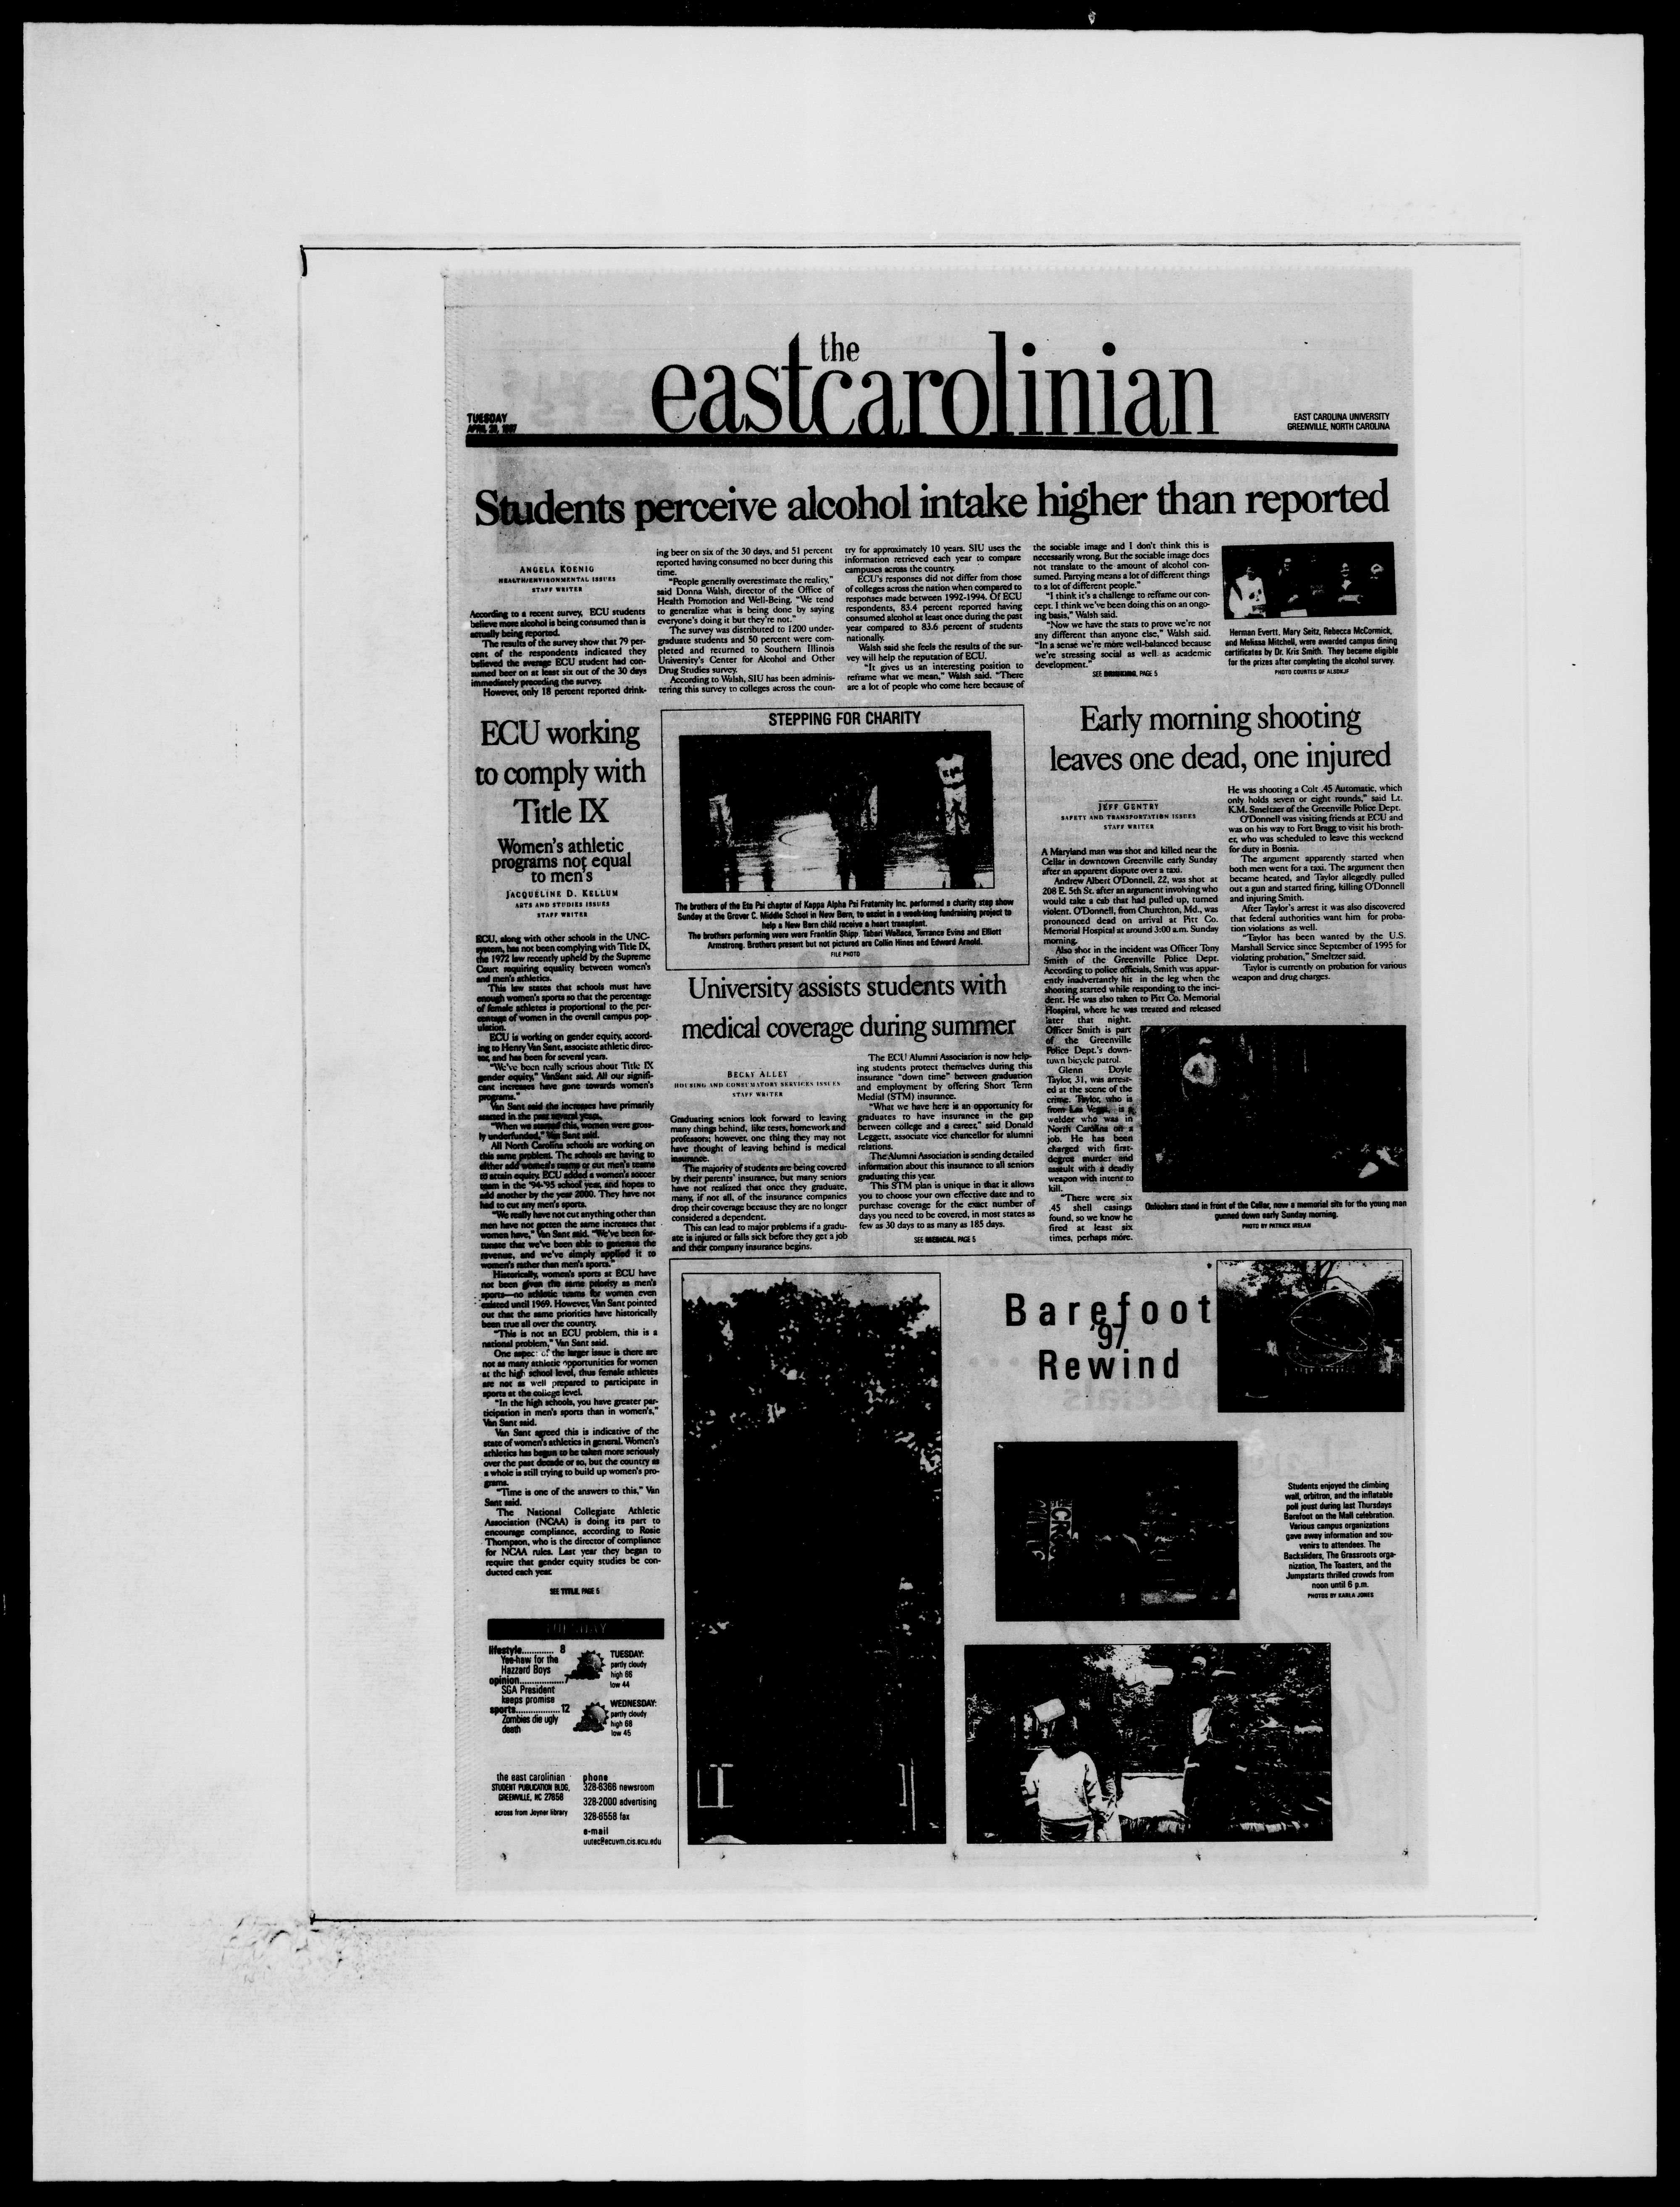 The East Carolinian, April 29, 1997